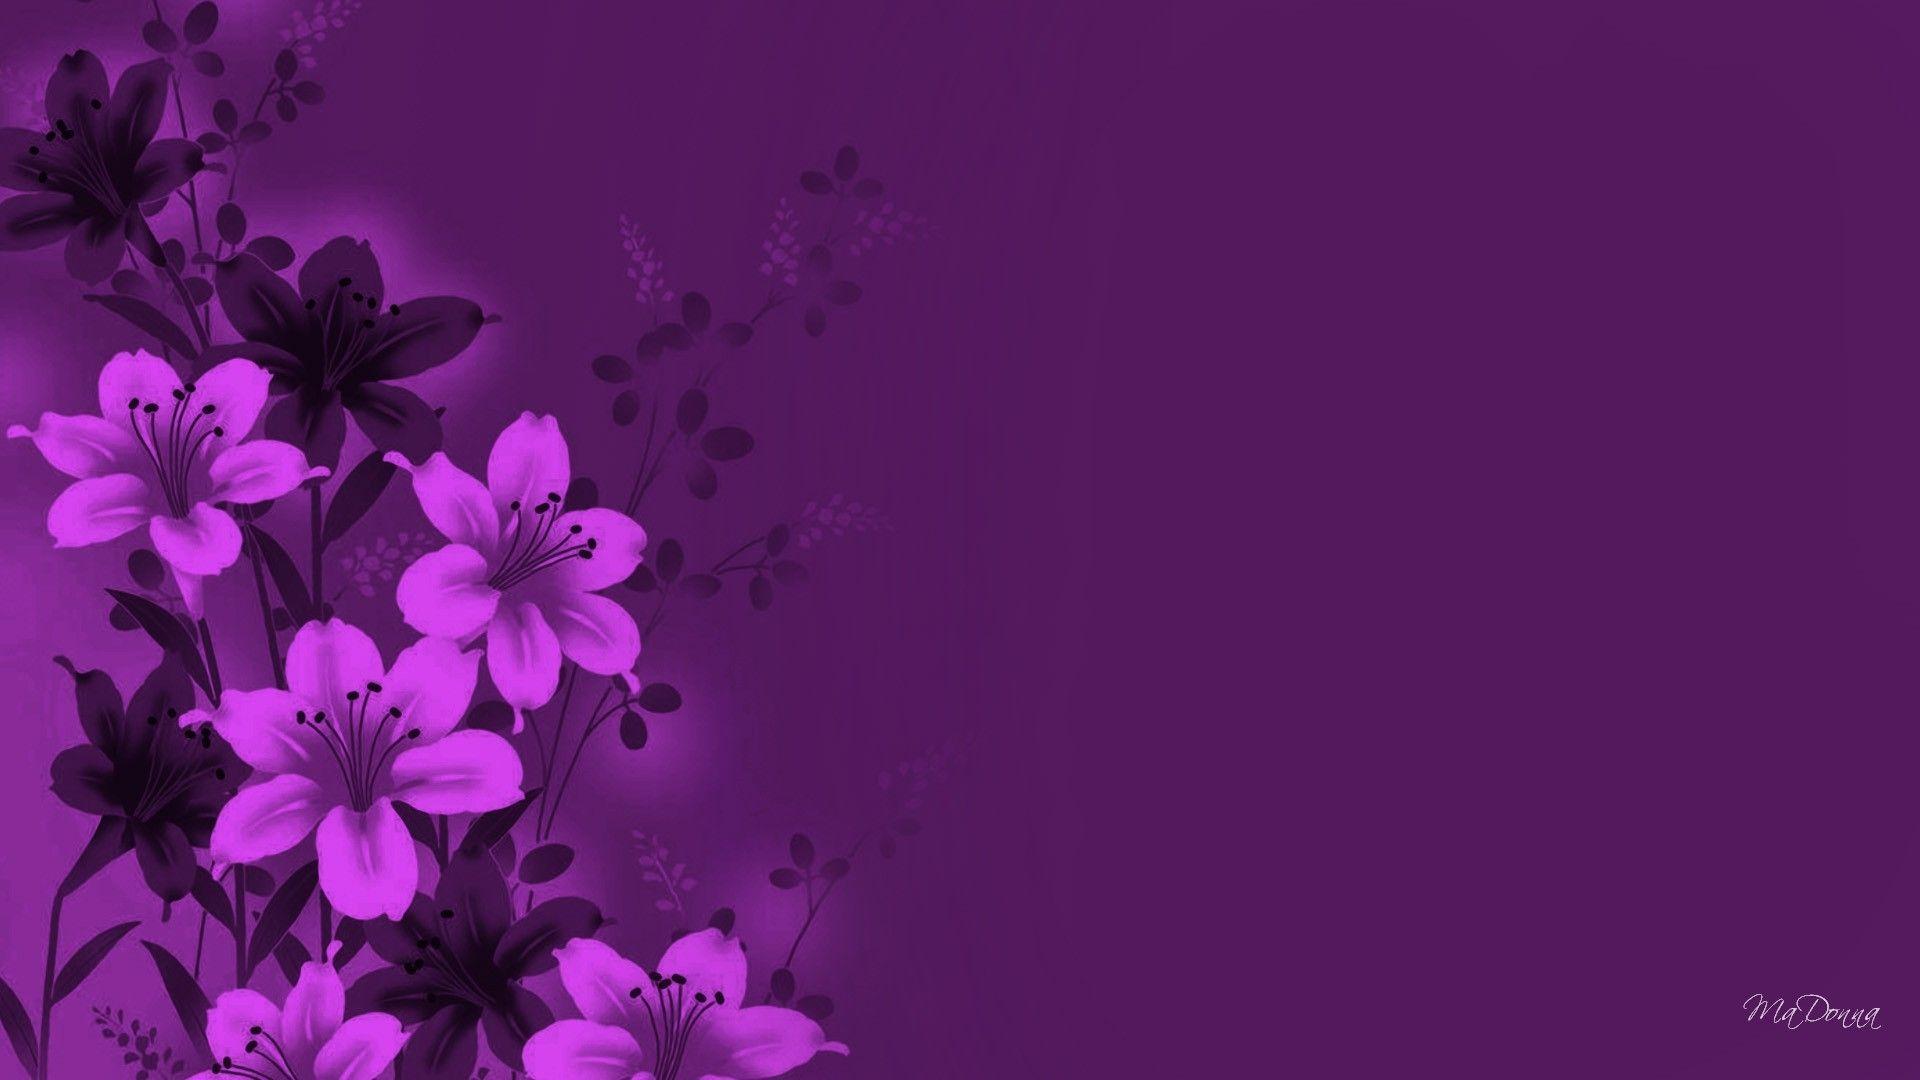 Color wallpaper: Inspirational Purple Sunset Quote Vibrant